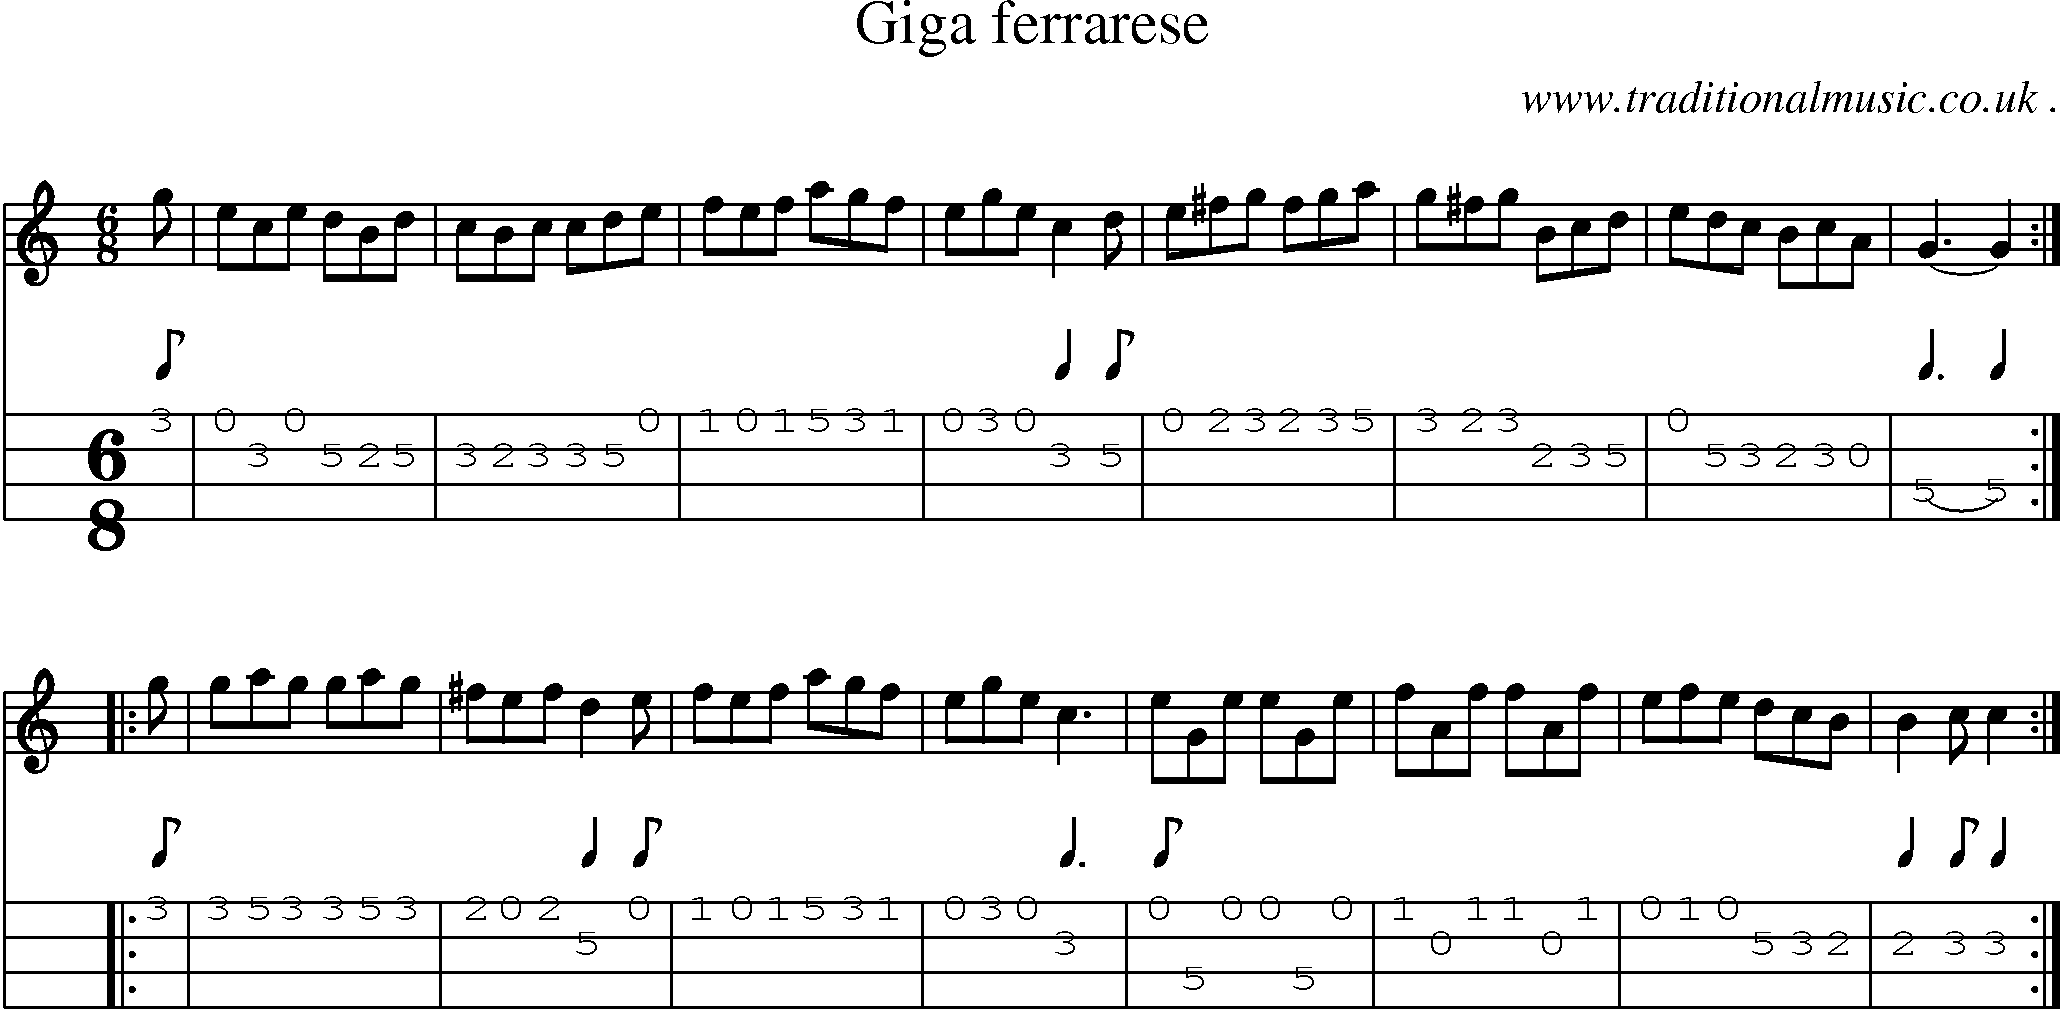 Sheet-Music and Mandolin Tabs for Giga Ferrarese